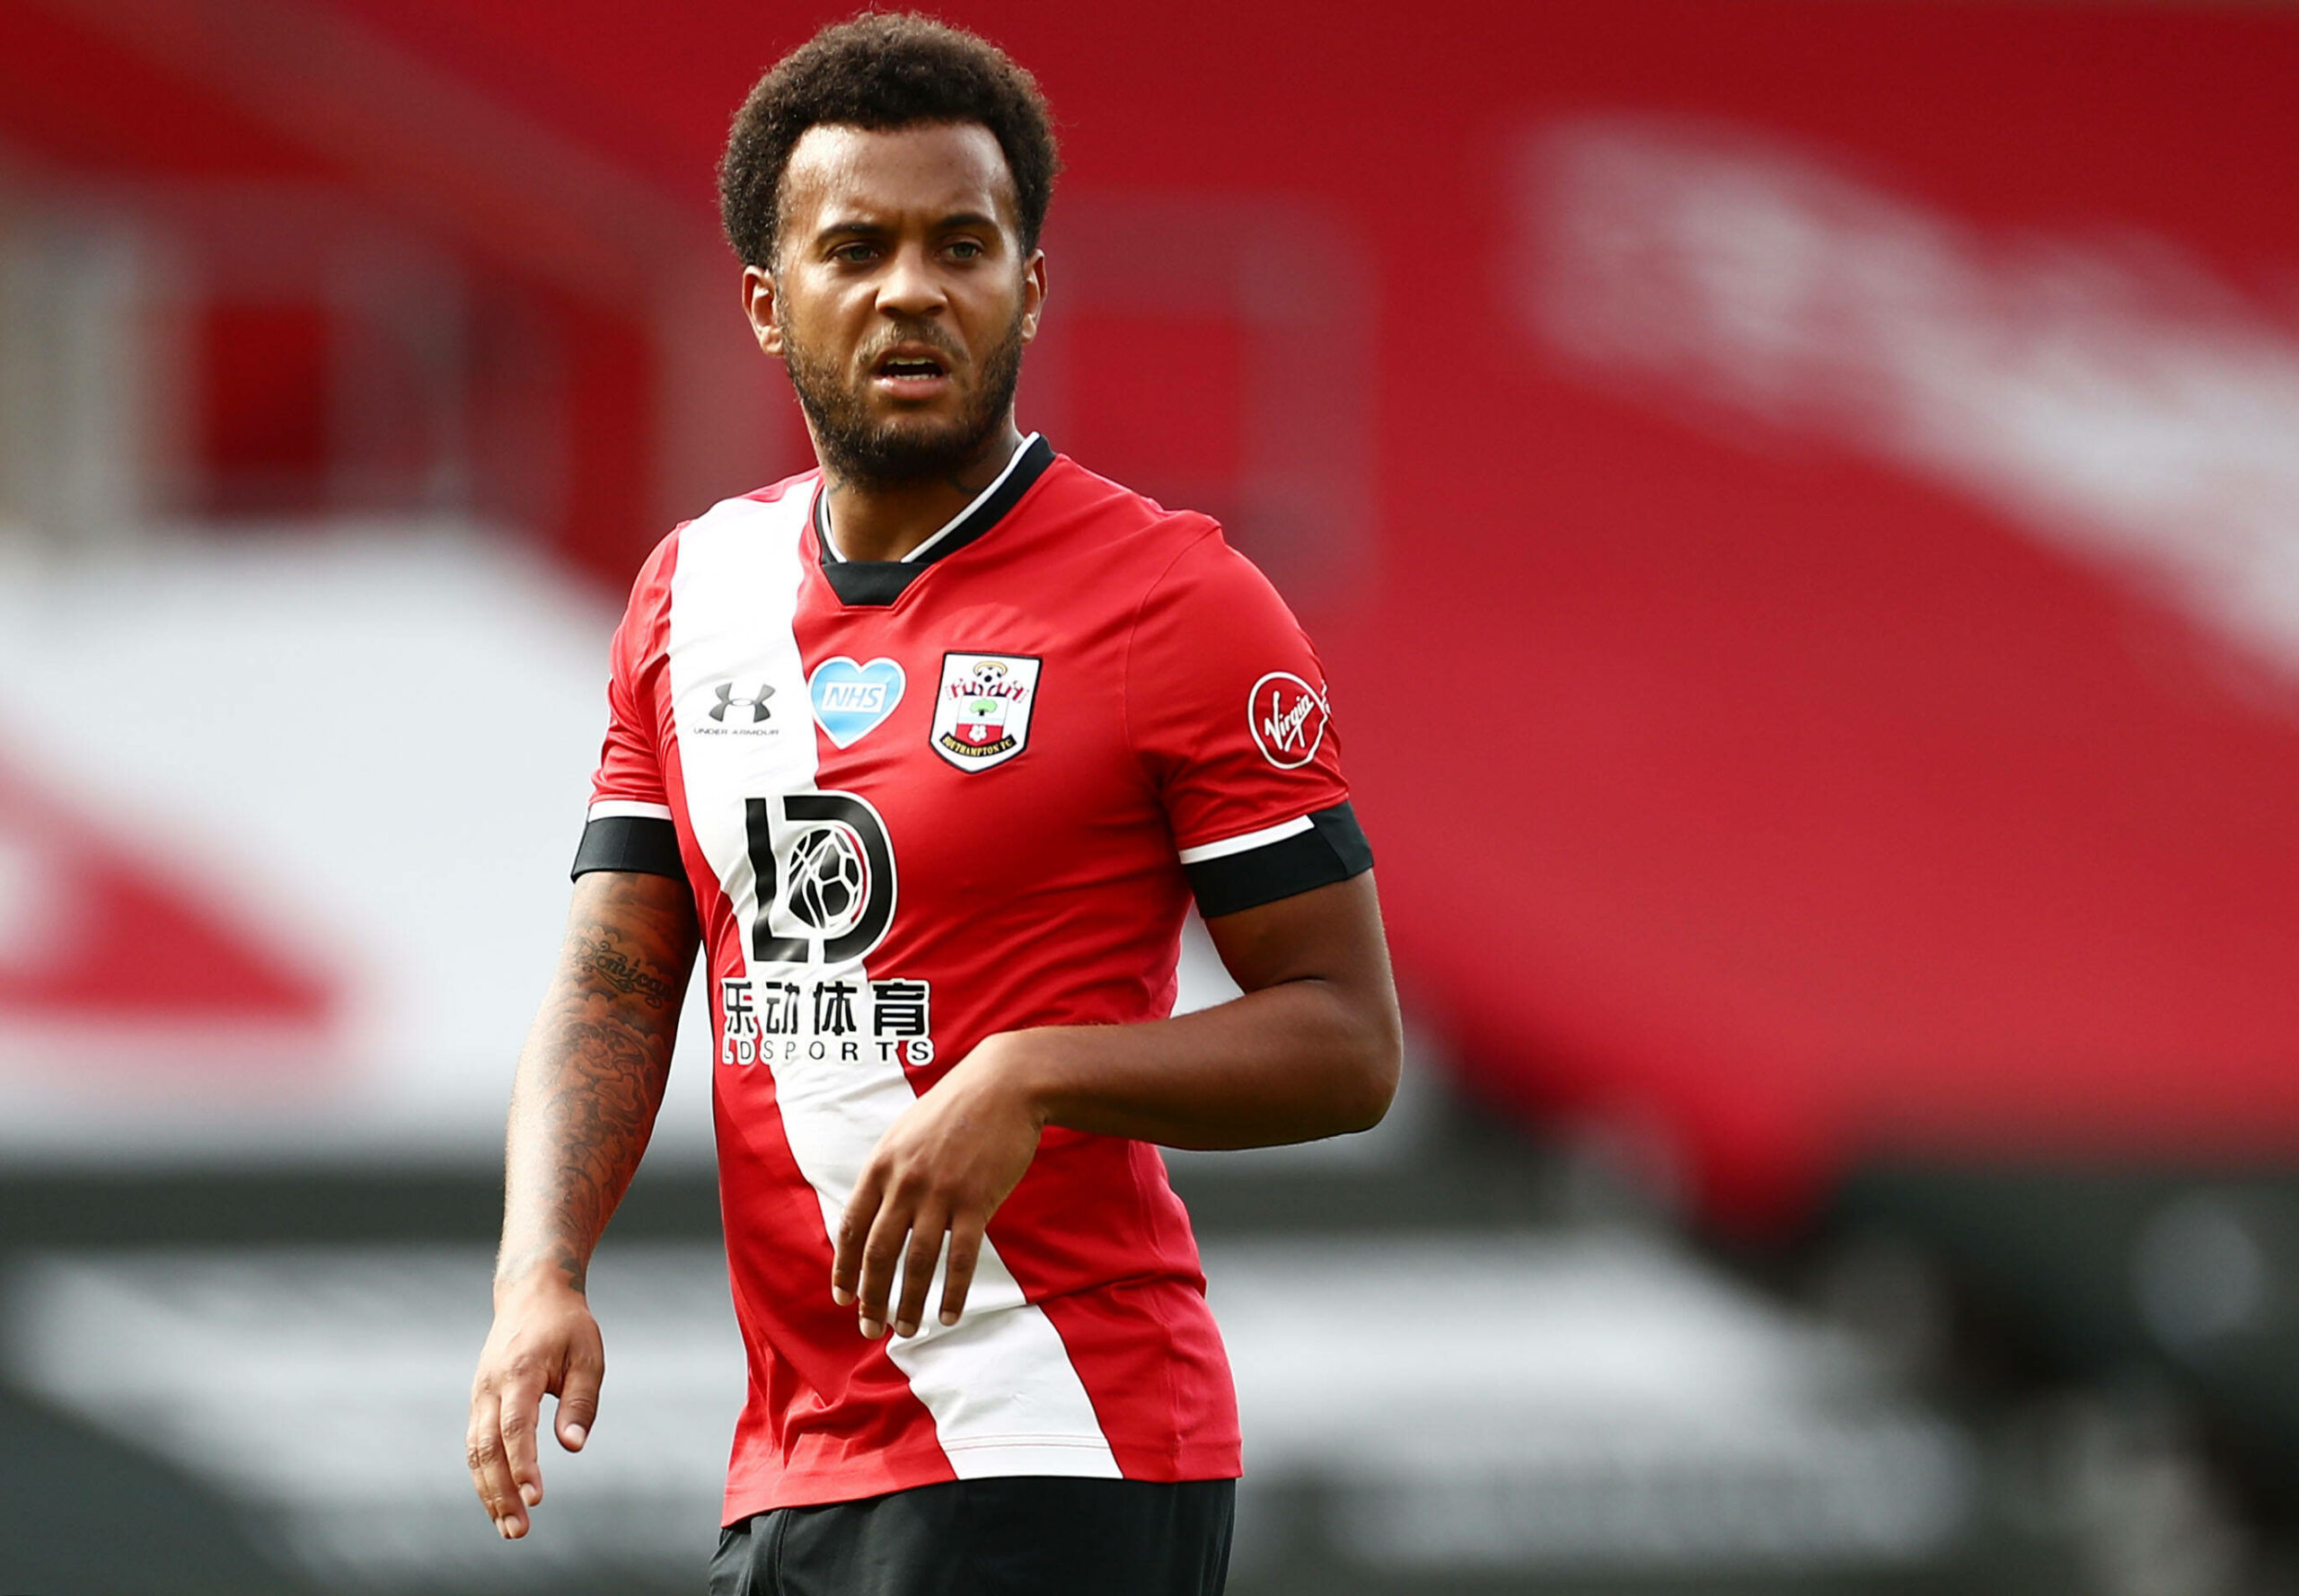 Southampton | Bertrand im Fokus mehrerer Top-Klubs?